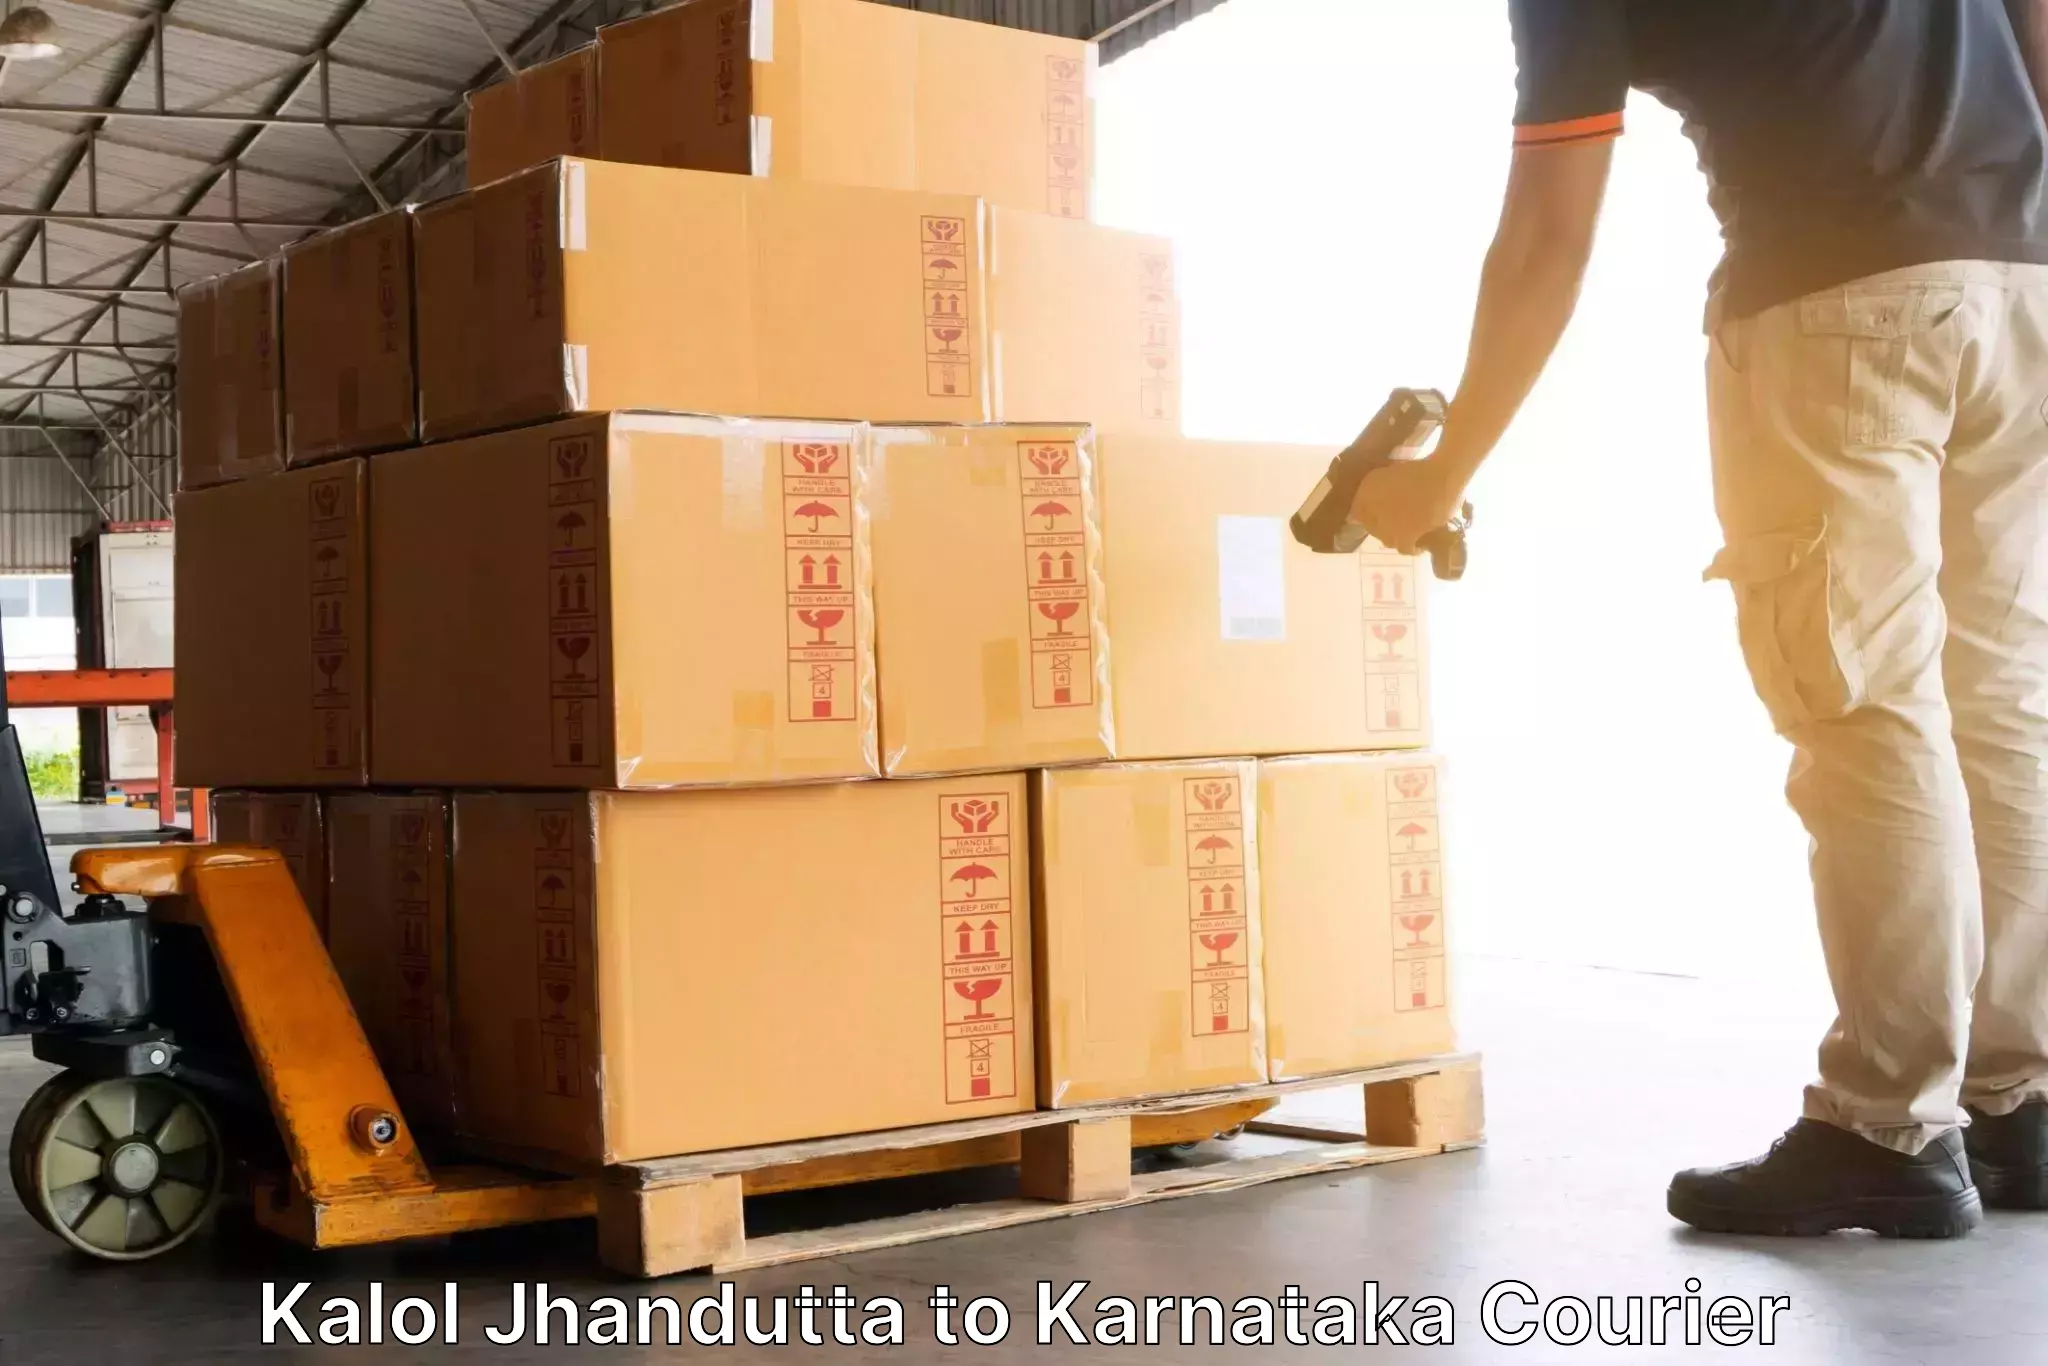 Express delivery network Kalol Jhandutta to Bijapur